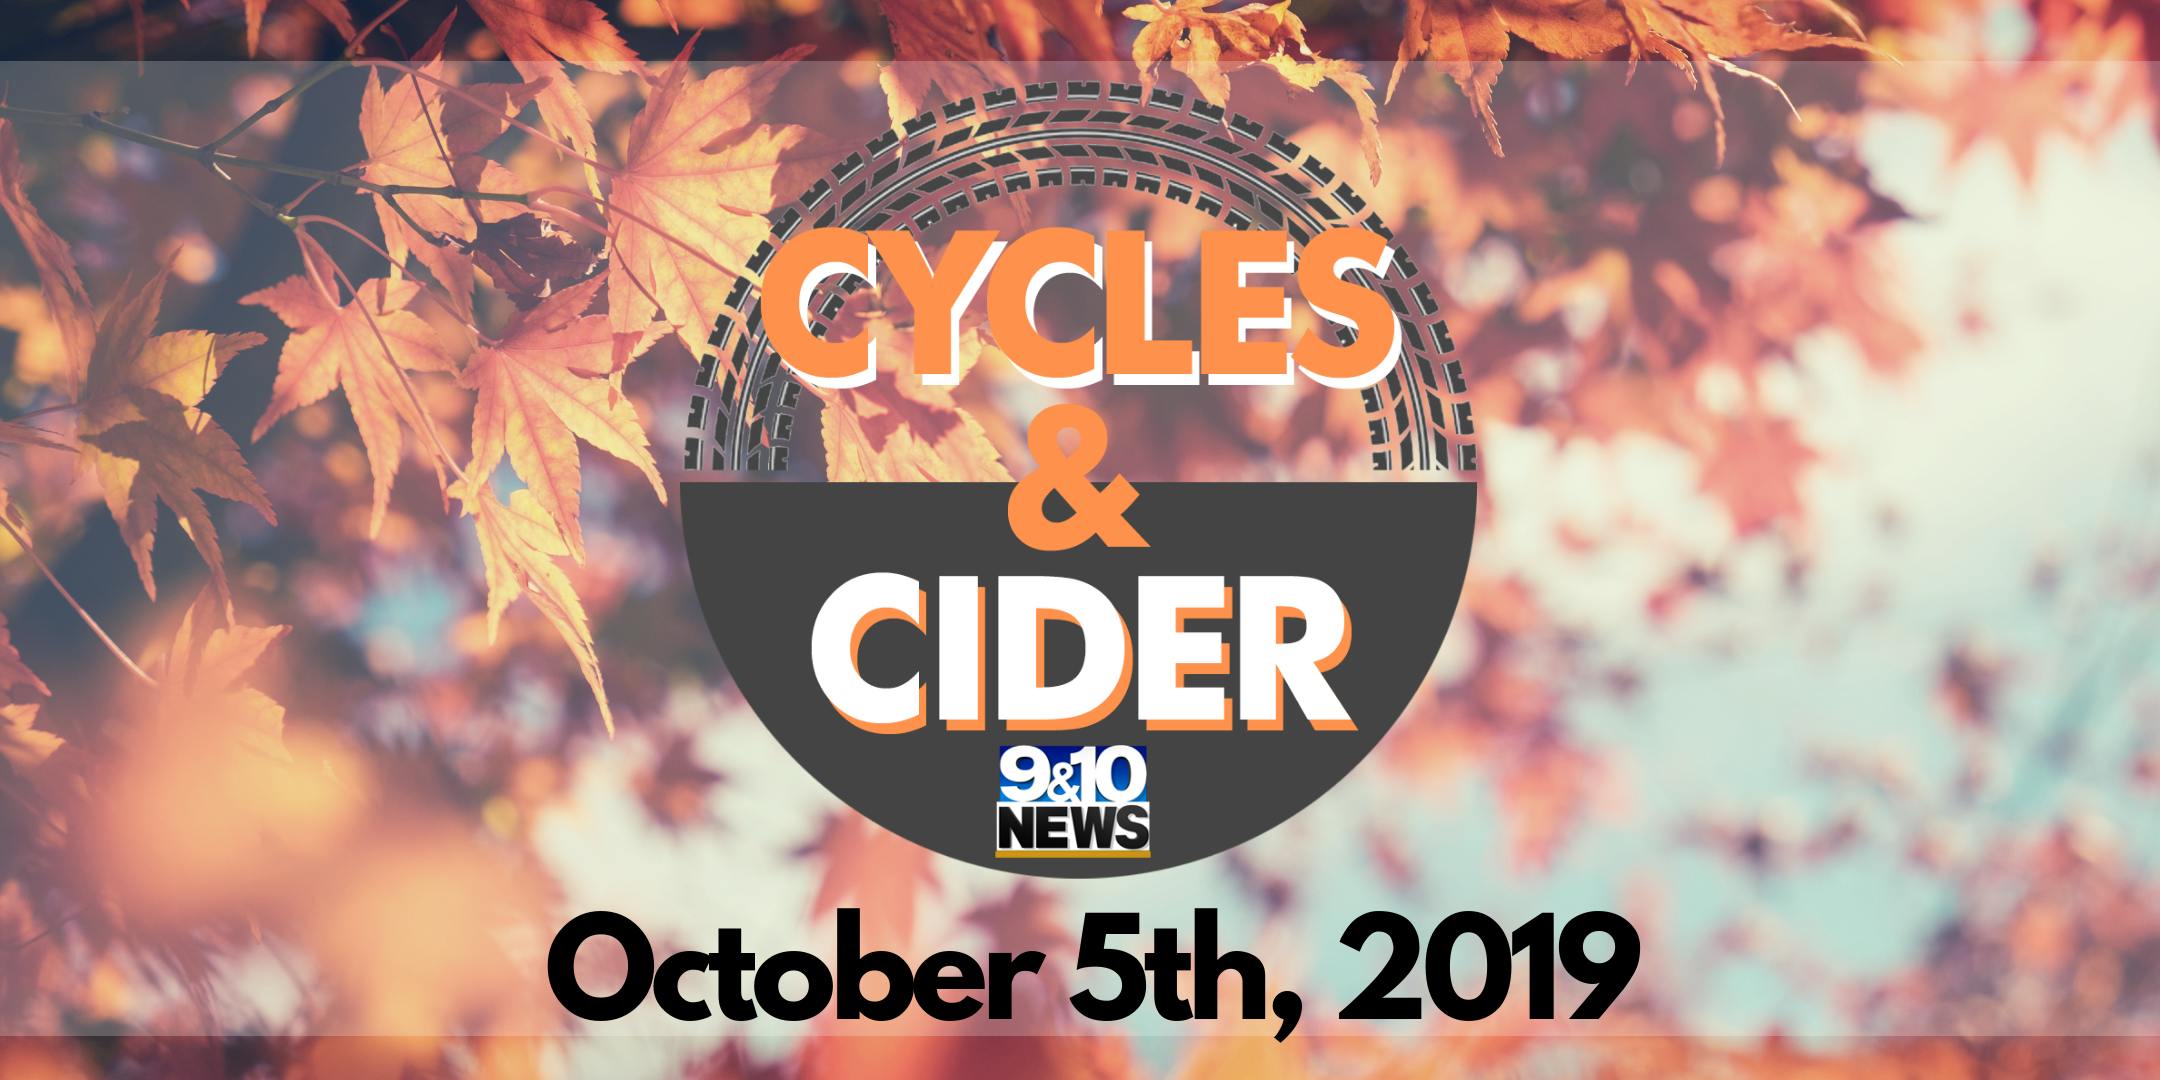 9 10 News Hosts Cycles Cider Bike Event 22 Jun 2019